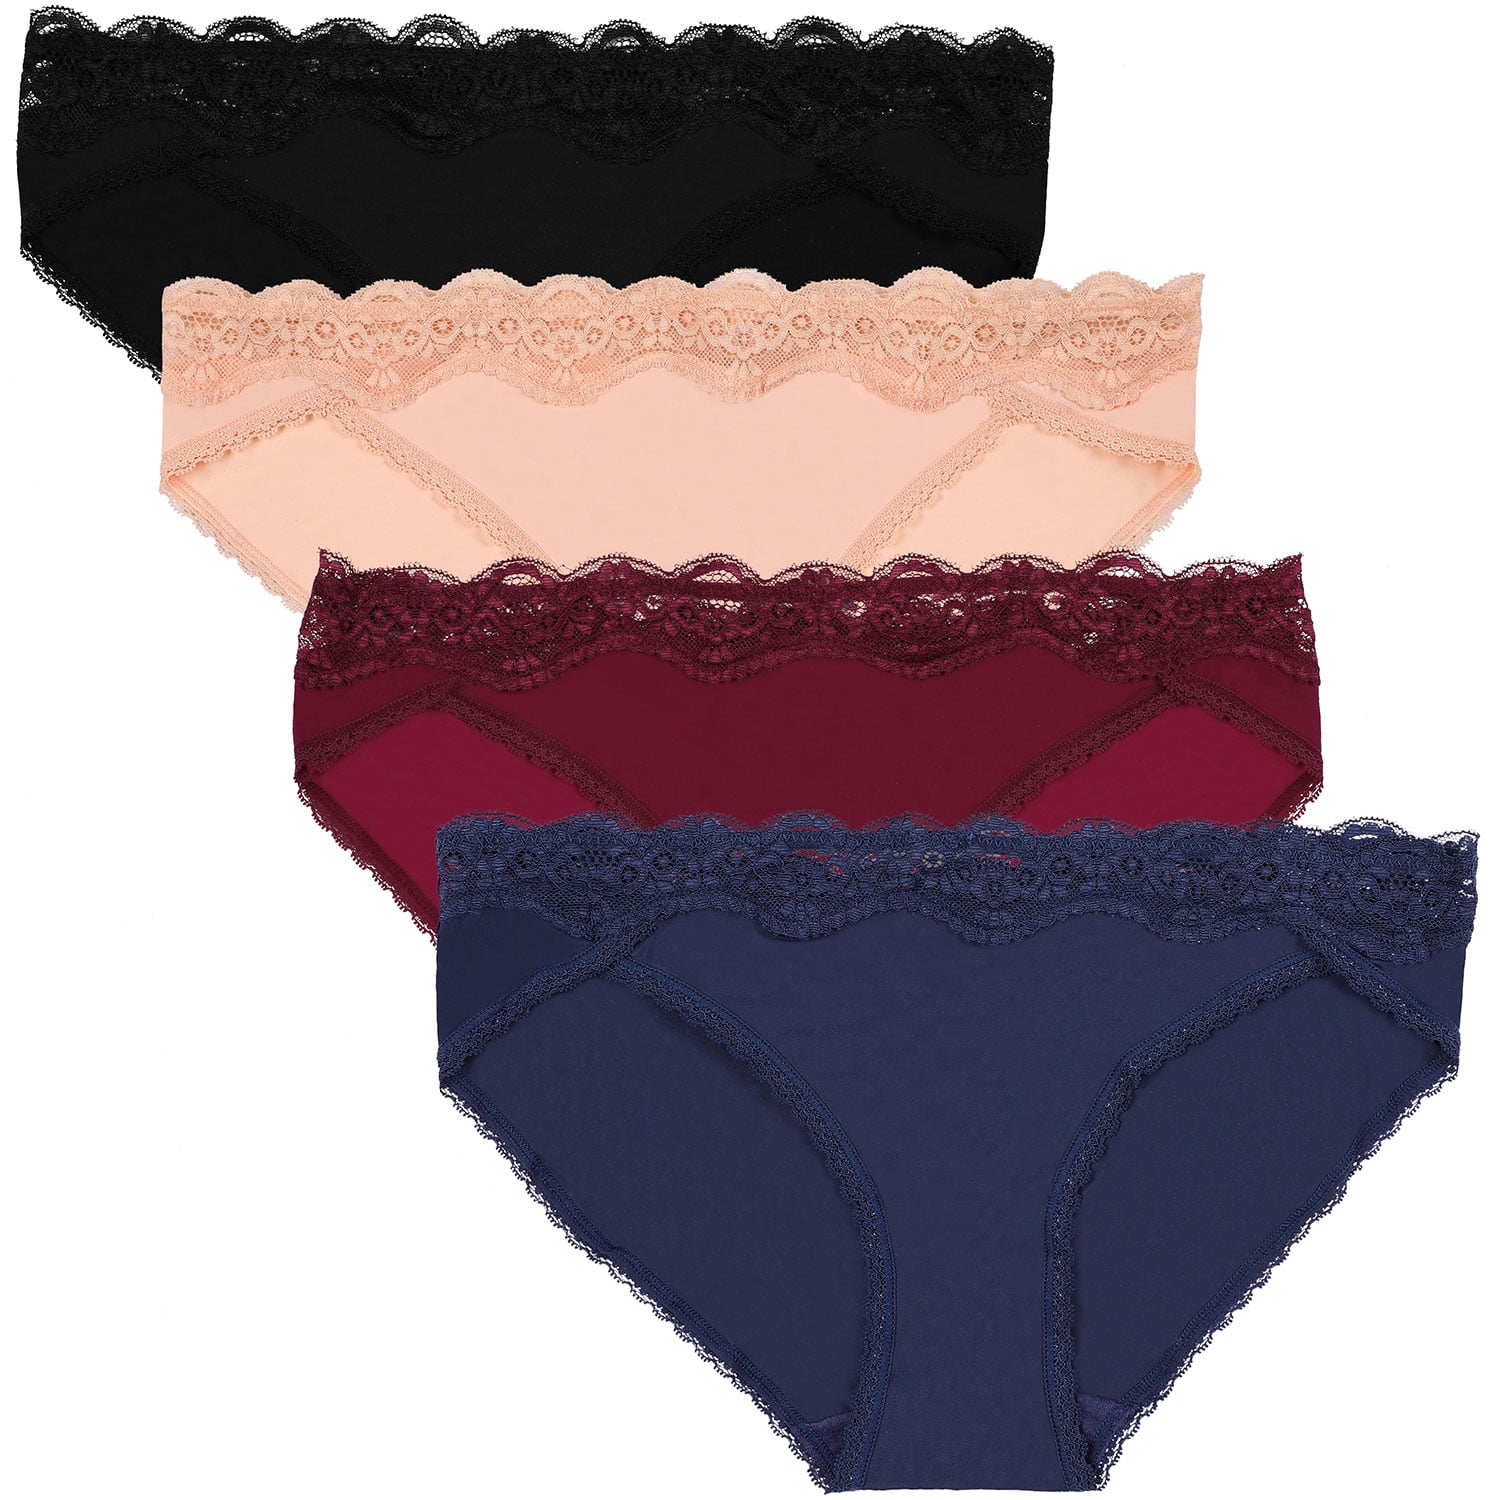 Seasment Women's Underwear Lace Bikini Panties Silky Comfy Lace Briefs Pack of 5 